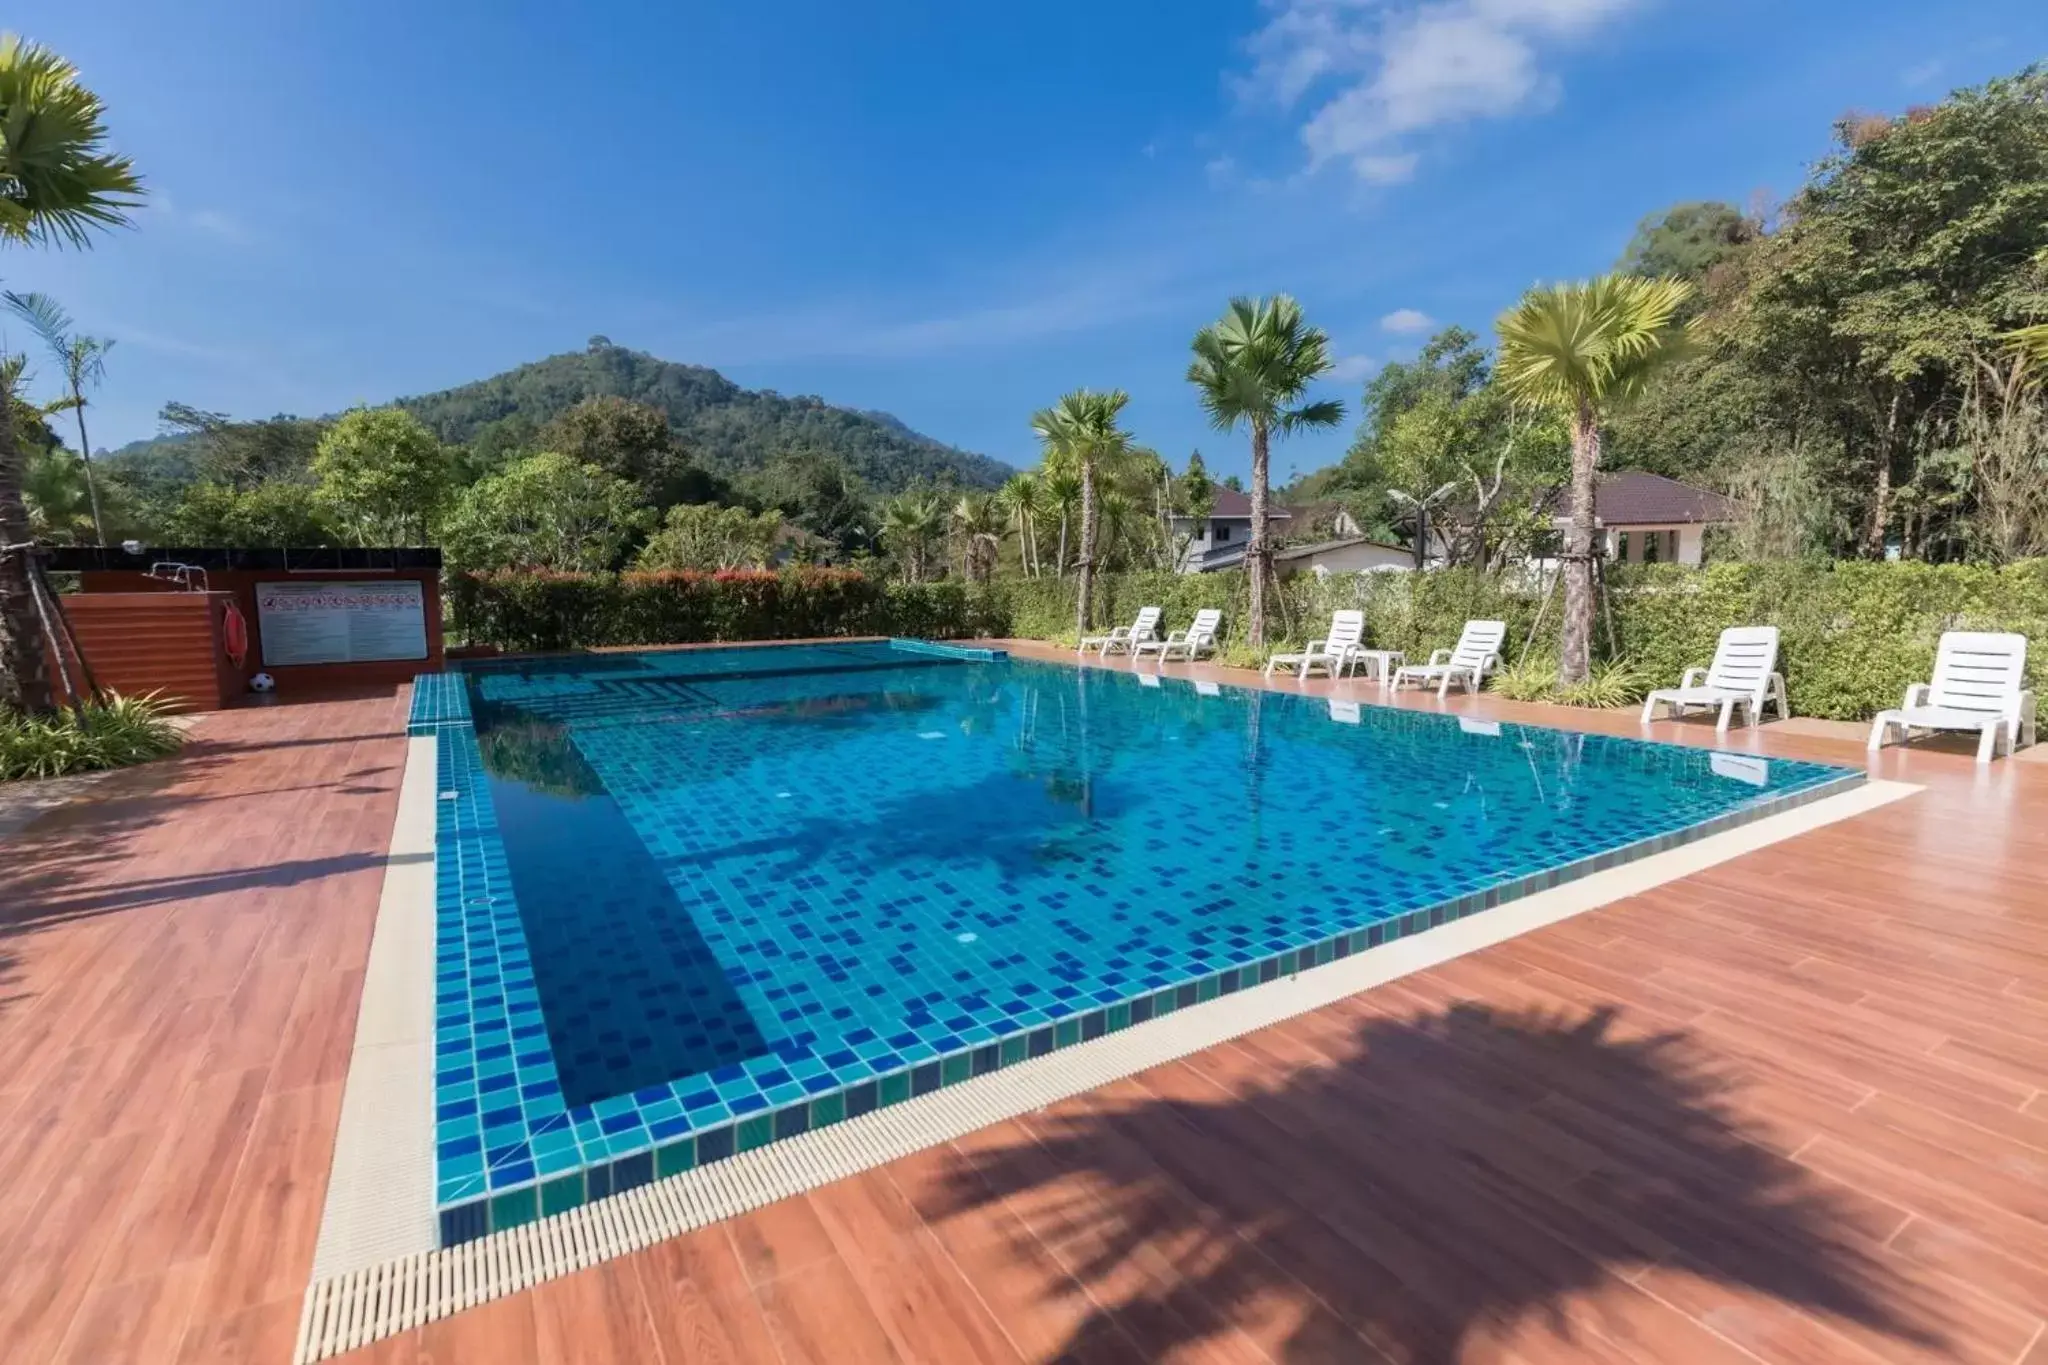 Swimming Pool in Khaosok Rainforest Resort